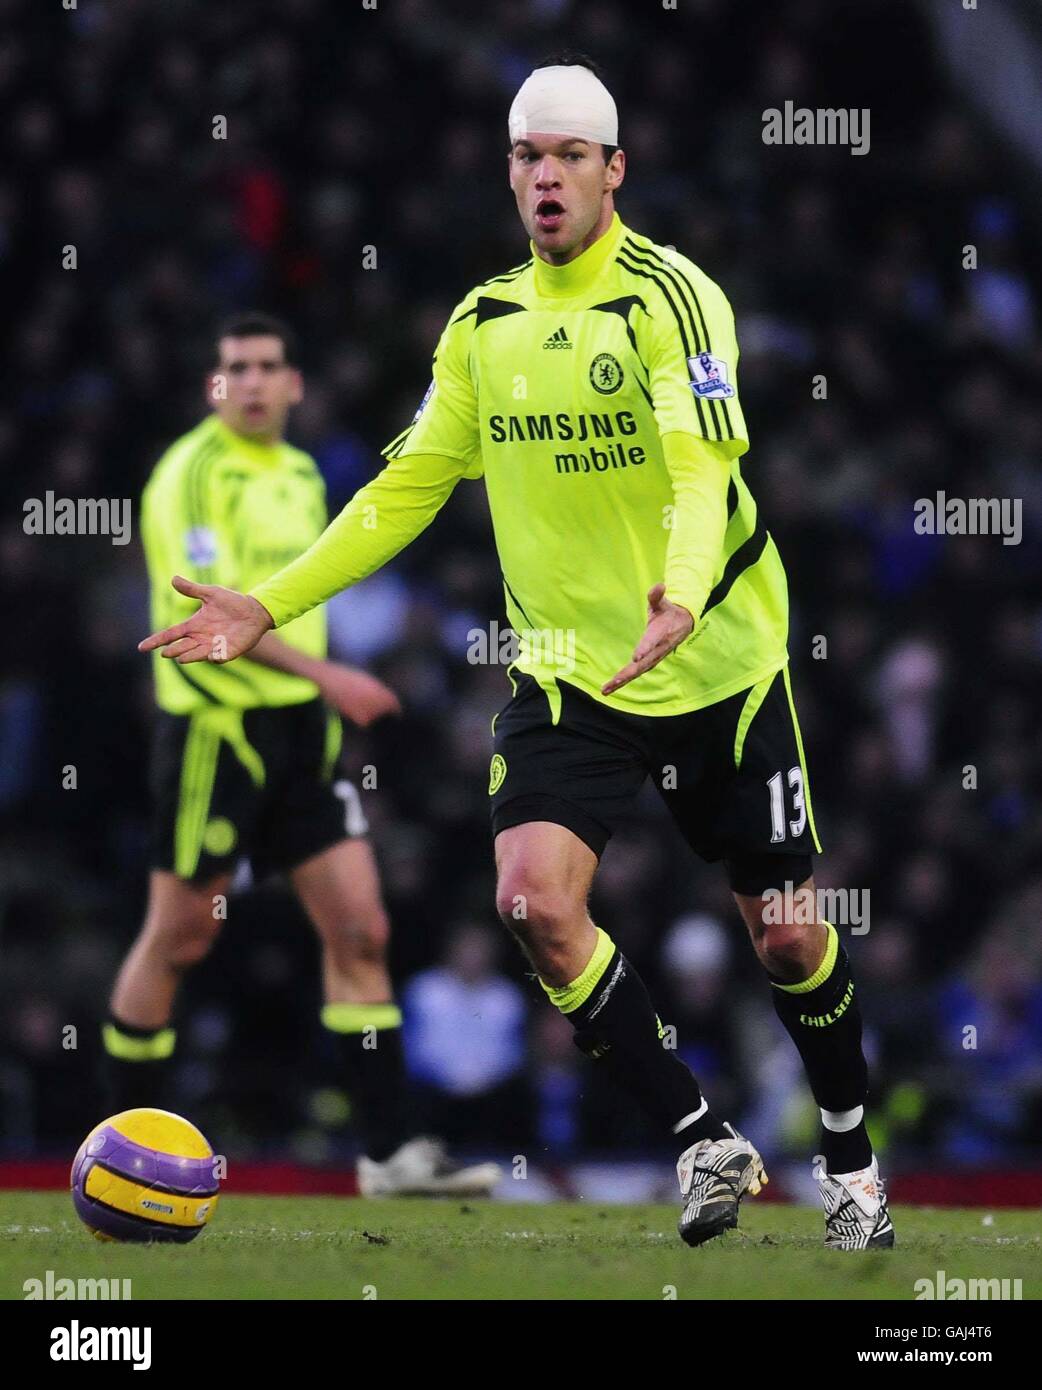 Chelsea's Michael Ballack in Aktion während des Spiels der Barclay's Premier League im Fratton Park, Portsmouth. Stockfoto